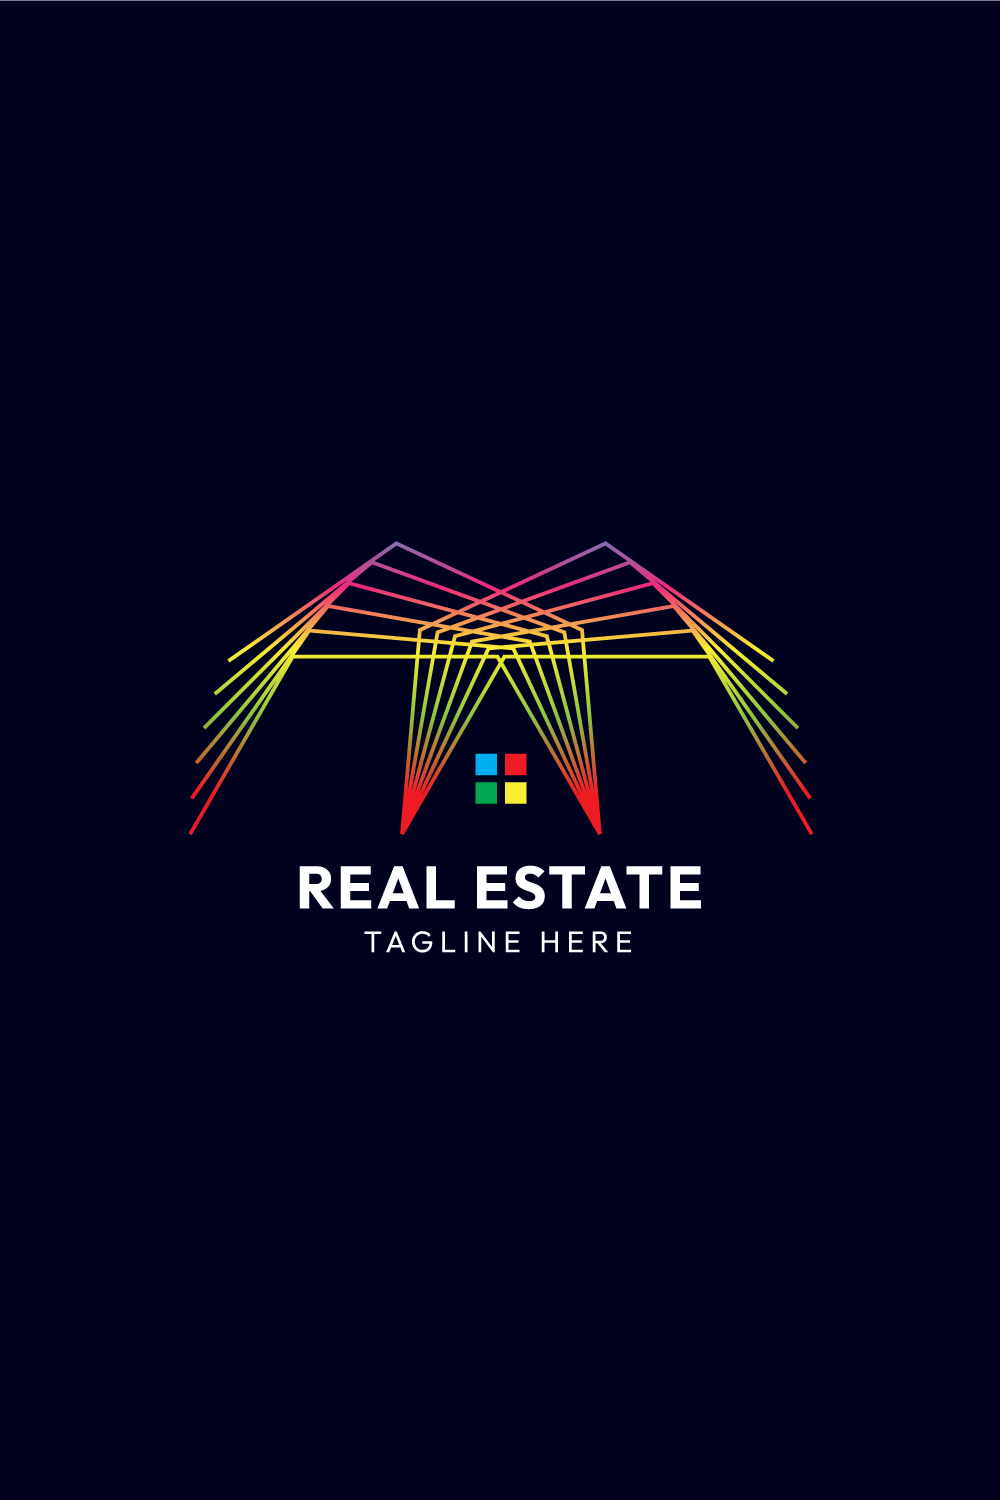 Elegant Real Estate Line Art Logo Design: Boost Your Brand with Timeless Sophistication pinterest preview image.